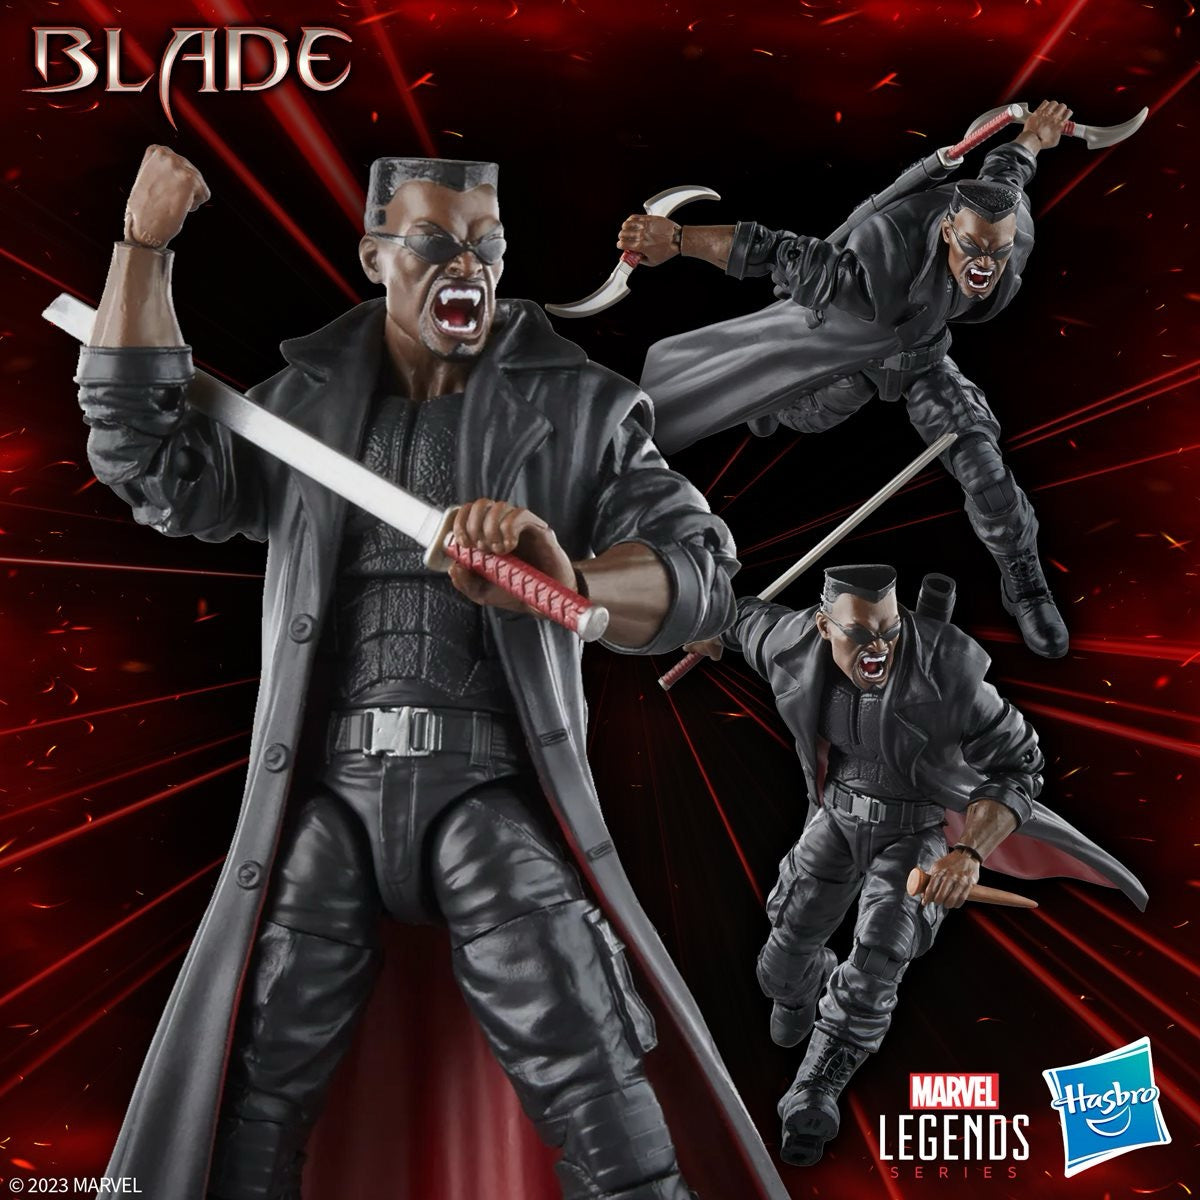 Marvel Legends Series Marvel Knights Blade Action Figure